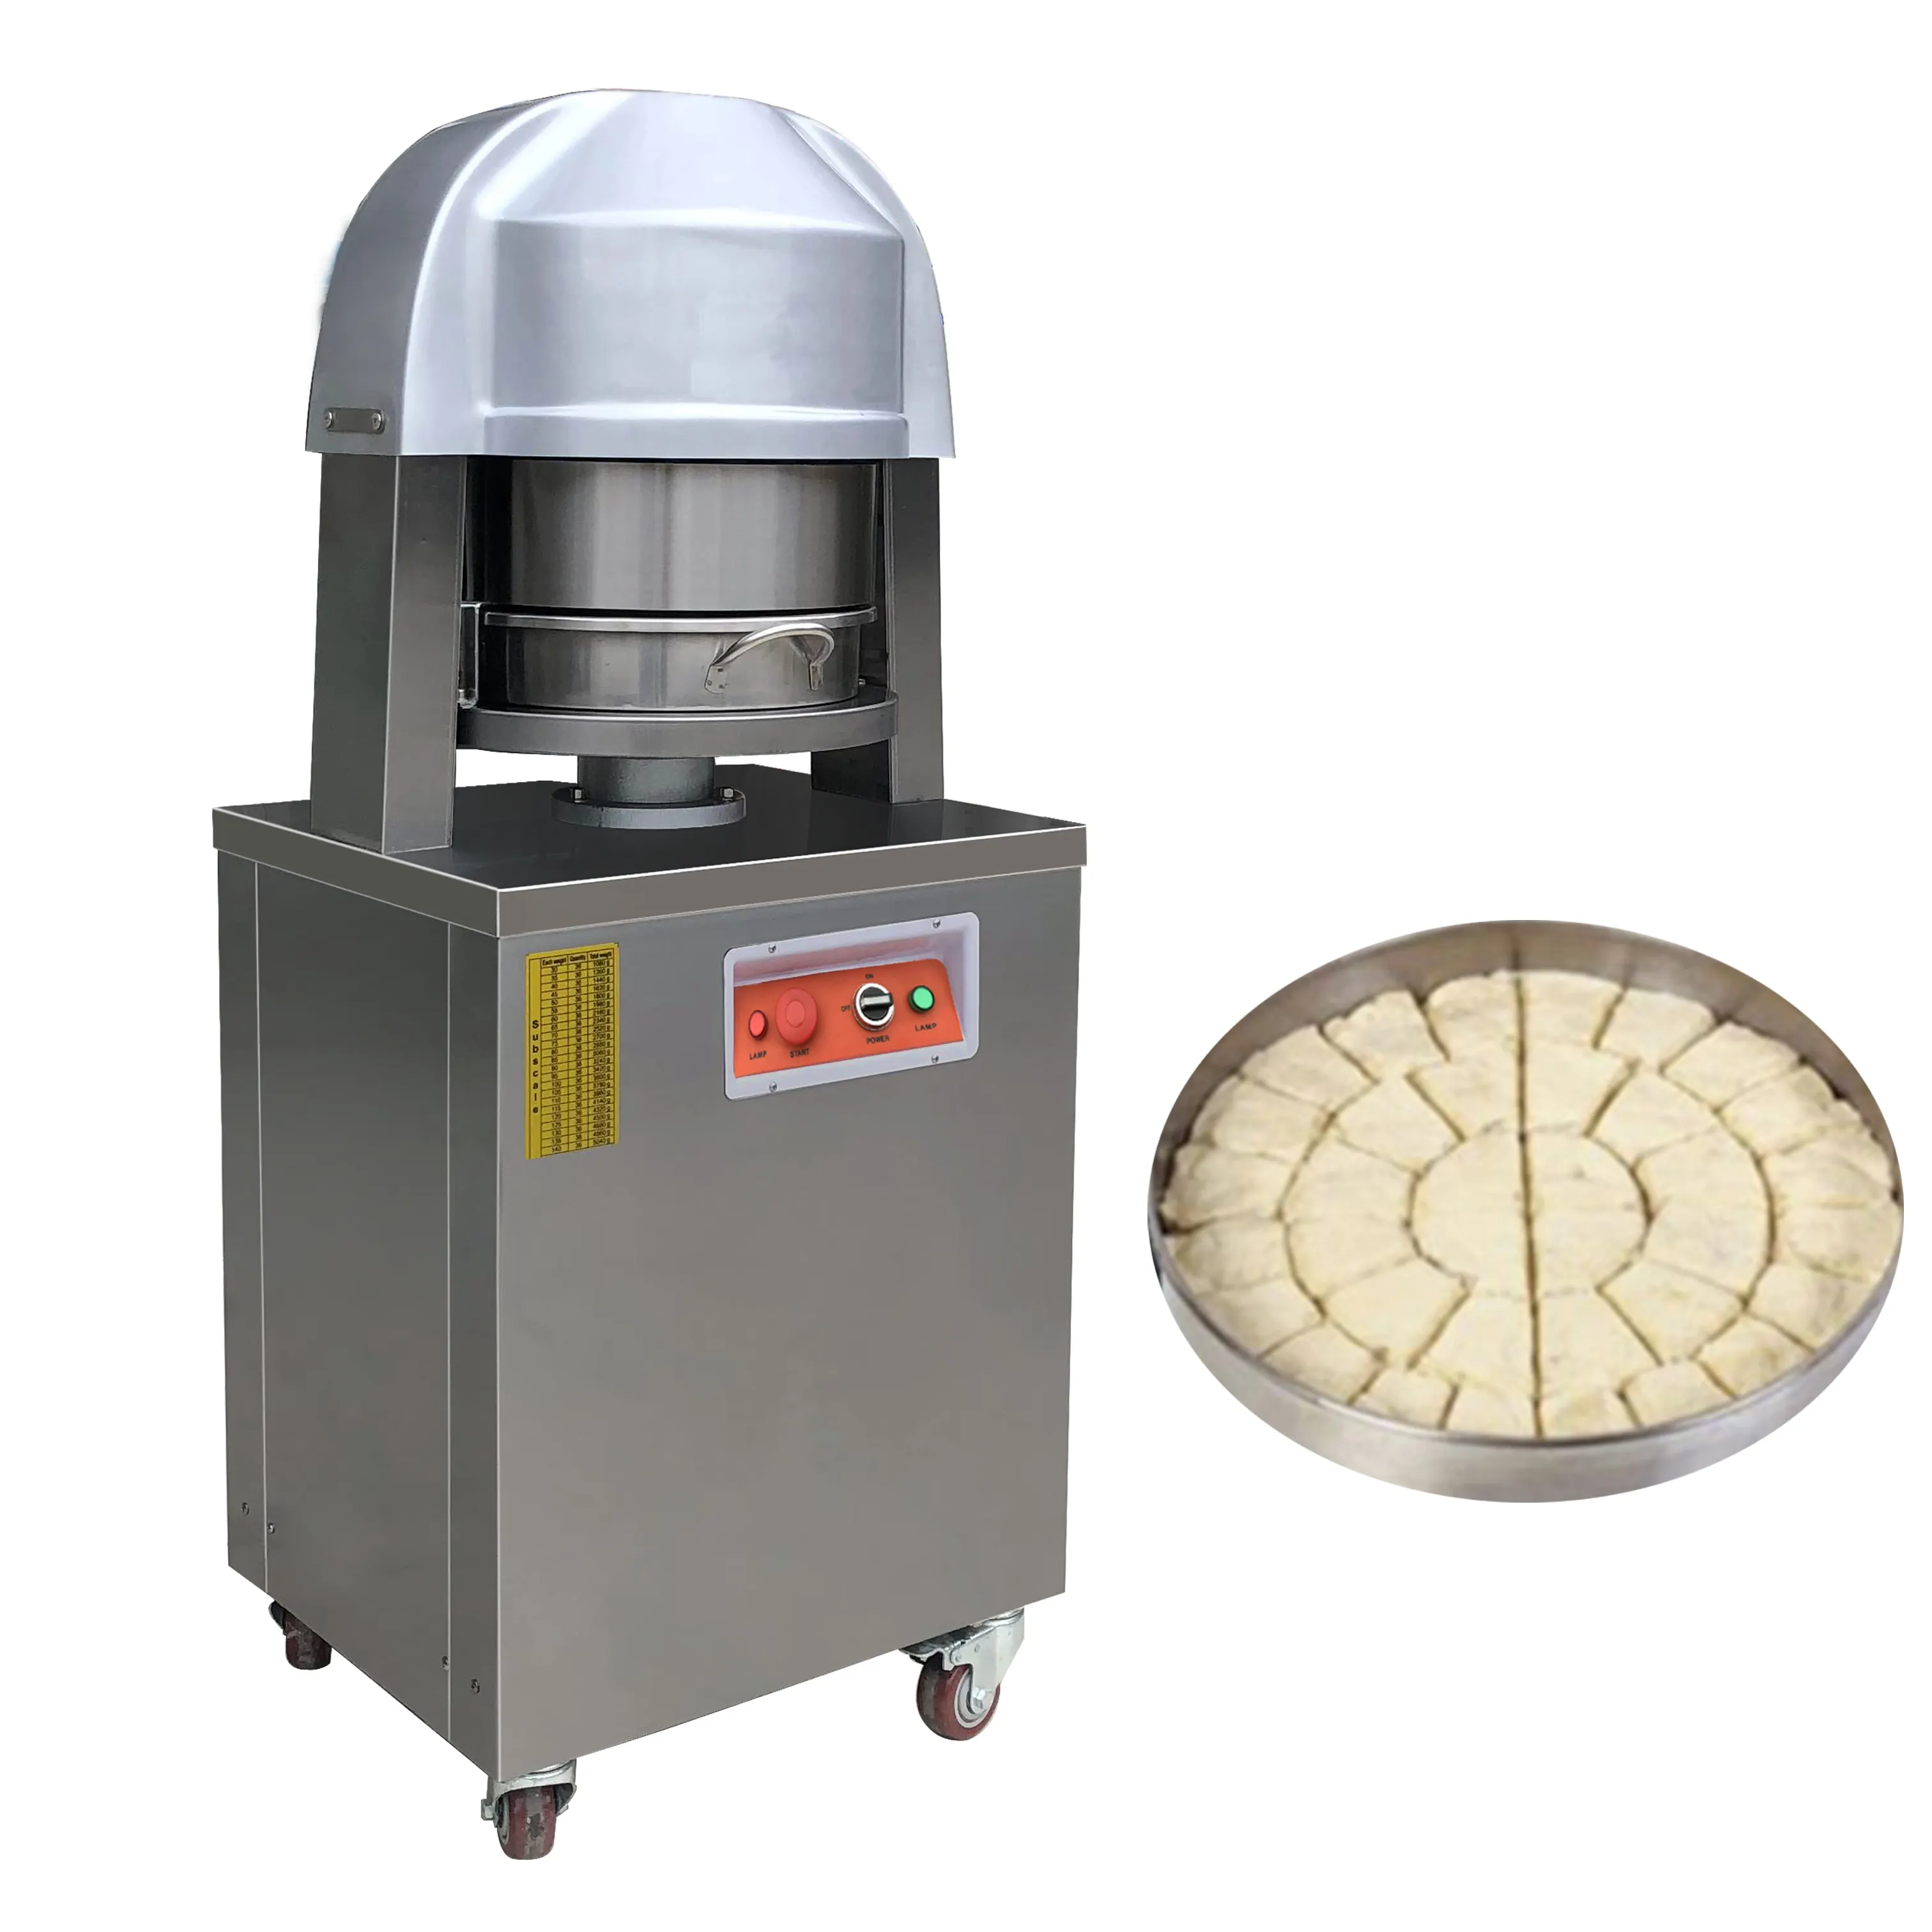 Tortilla automática para massa, preço de atacado barato, máquina redonda para padaria, cortador de bolas e divisor de massa